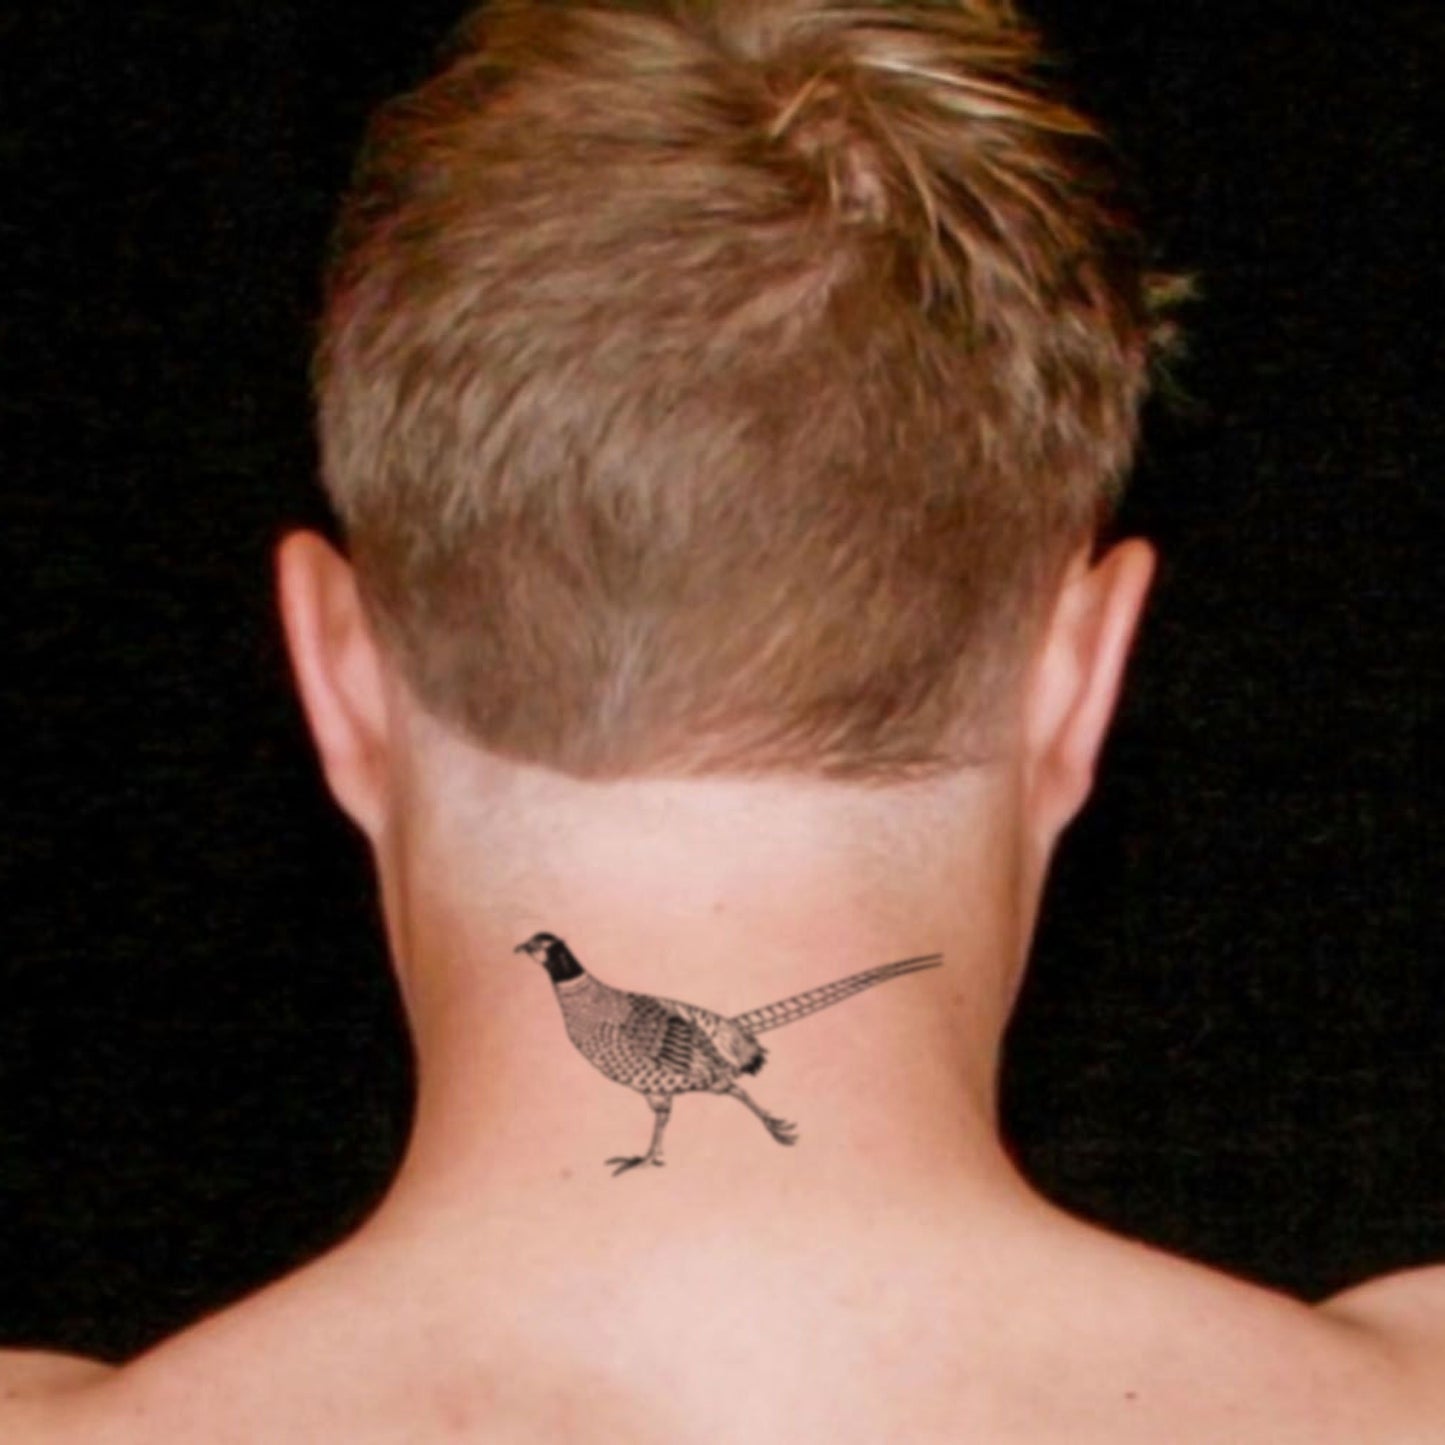 fake medium pheasant bird animal temporary tattoo sticker design idea on neck